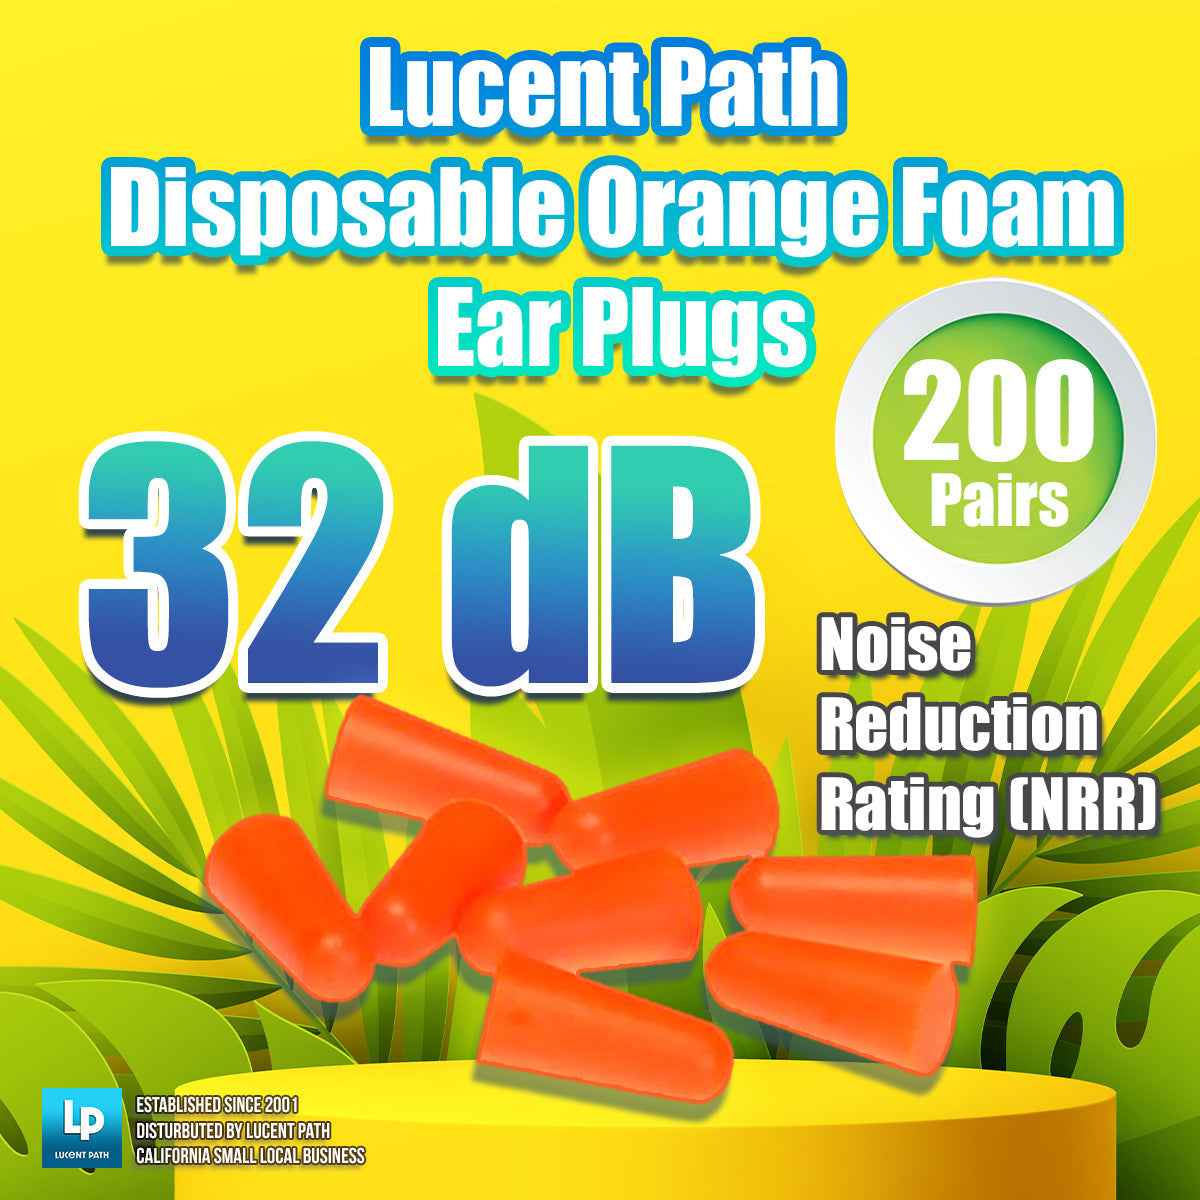 Lucent Path Disposable Orange Foam Ear plugs